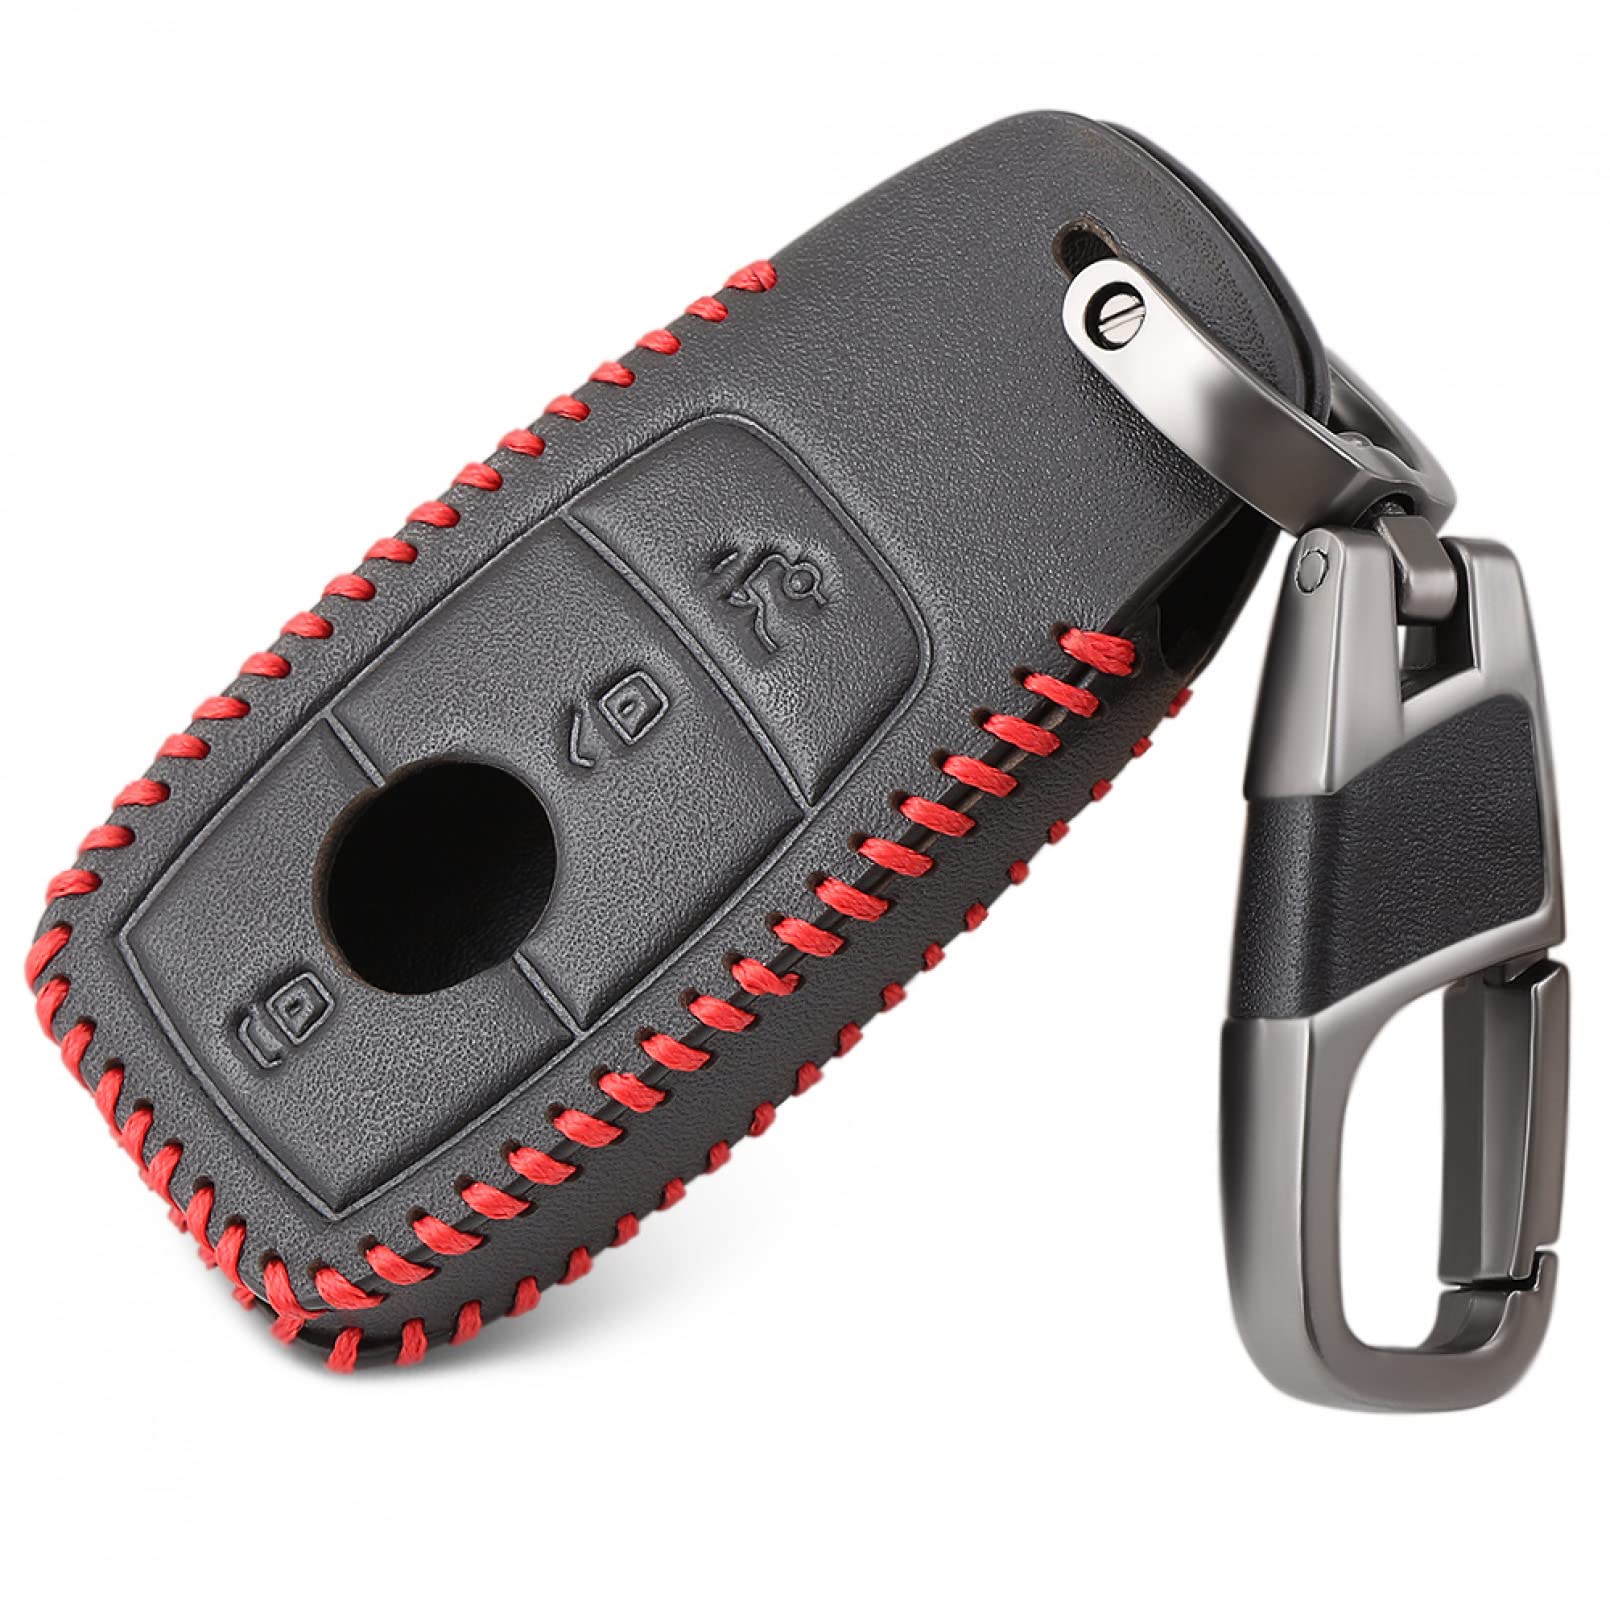 Leder Auto Remote Key Protector Case Cover Shell Schlüsselanhänger Zubehör für Mercedes Benz 2017 E-Klasse W213 2018 S-Klasse Neue SLC SLK Klasse E E200 E260 E300 E320 von ALIANQ